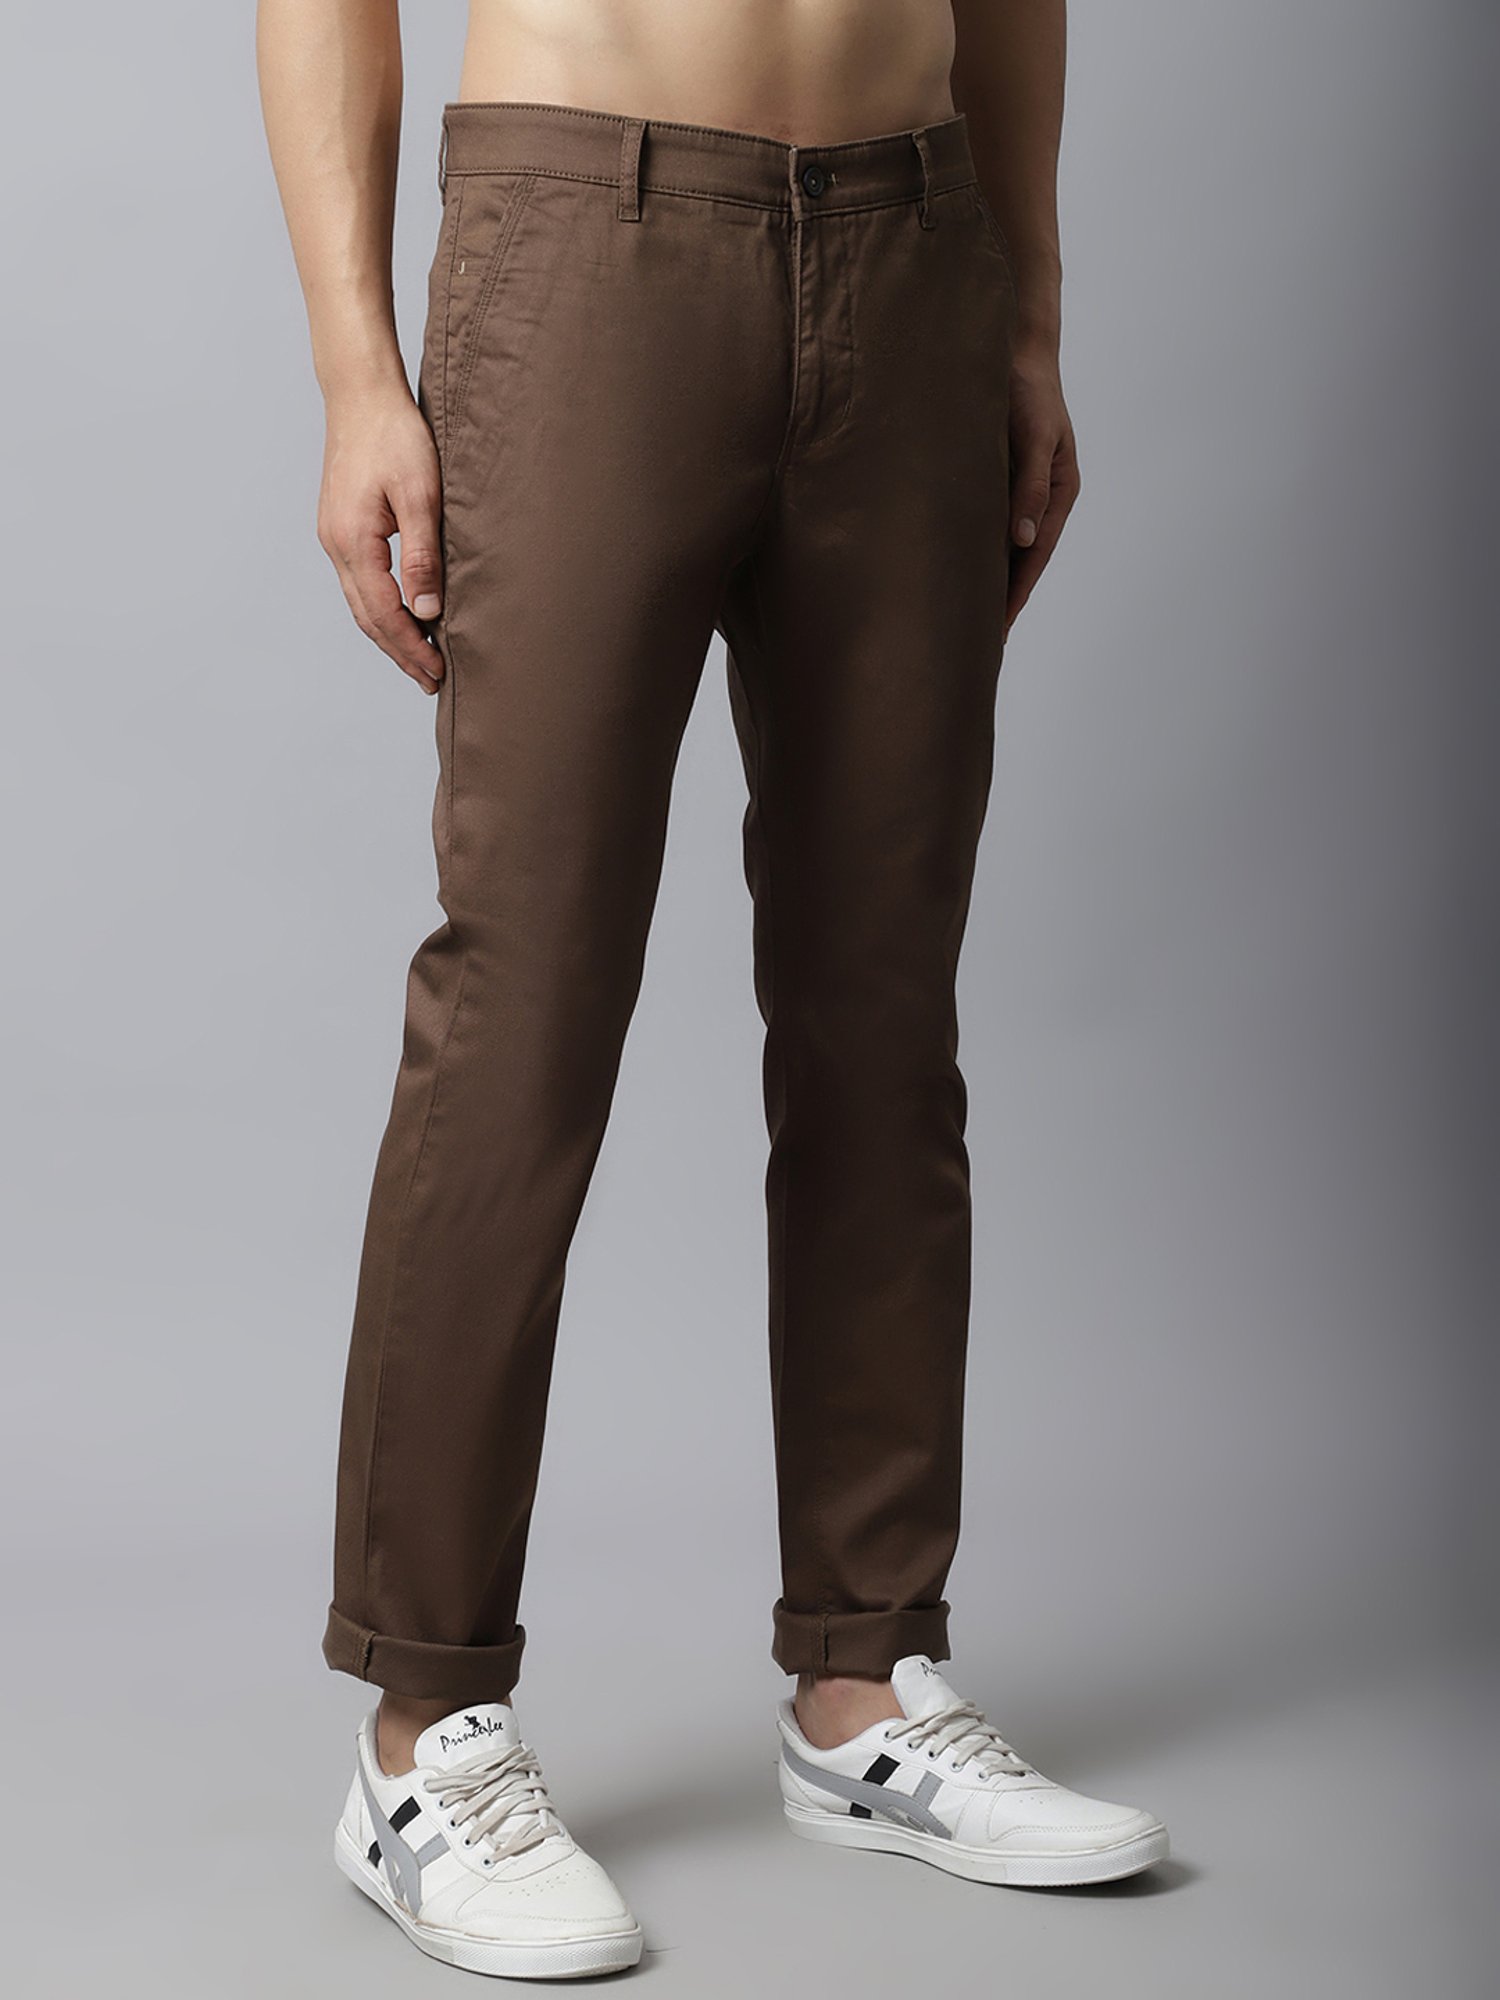 Buy Cantabil Men Grey Cotton Regular Fit Casual Trouser  (MTRC00058_LTGREY_30) at Amazon.in